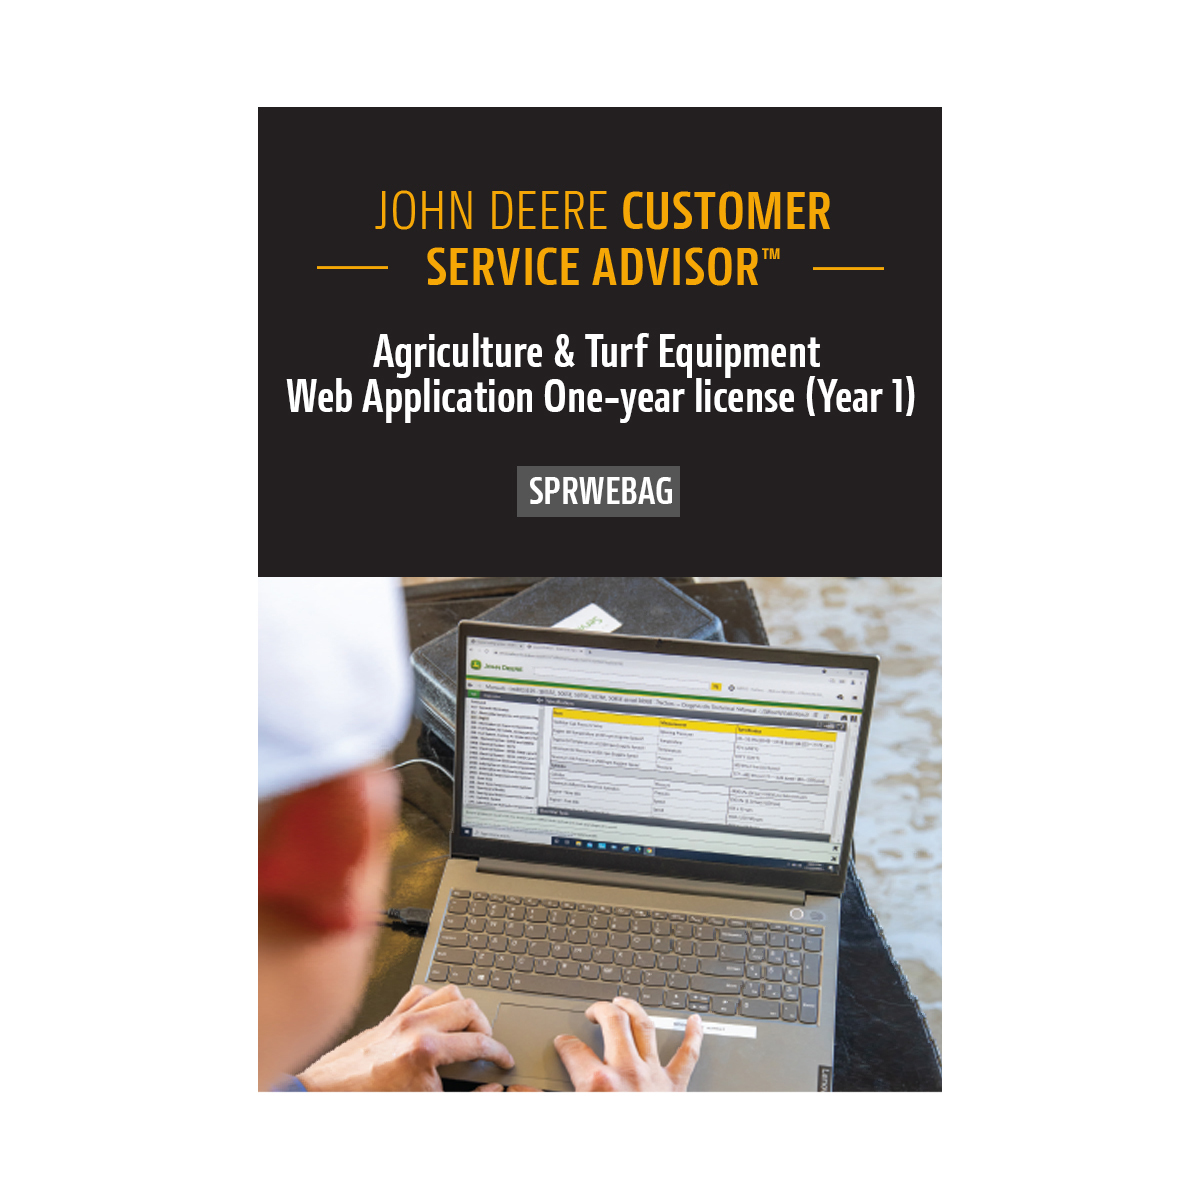 John Deere Customer Service ADVISOR™ Agriculture & Turf Equipment Web Application​ One-year license (Year 1)